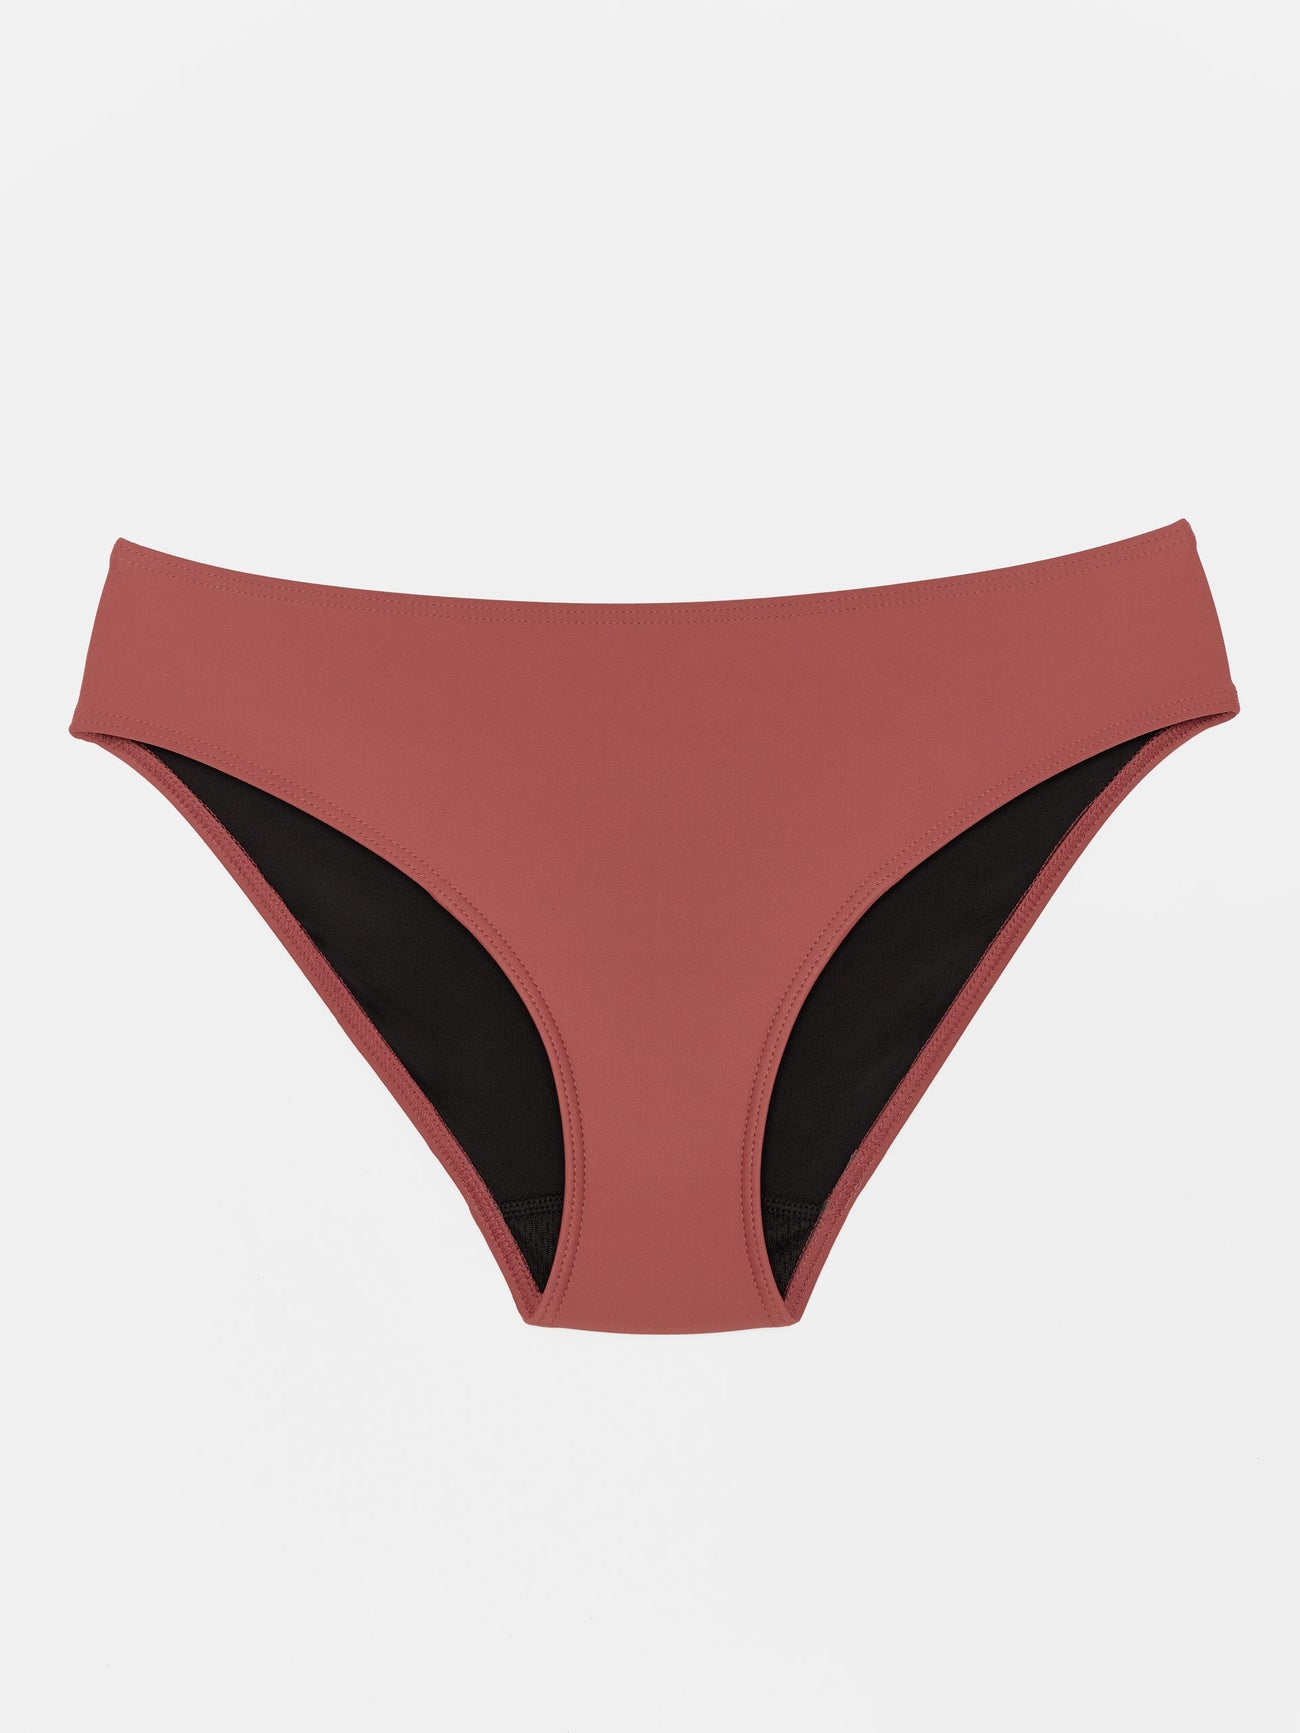 Period swimwear - Brief - Raspberry